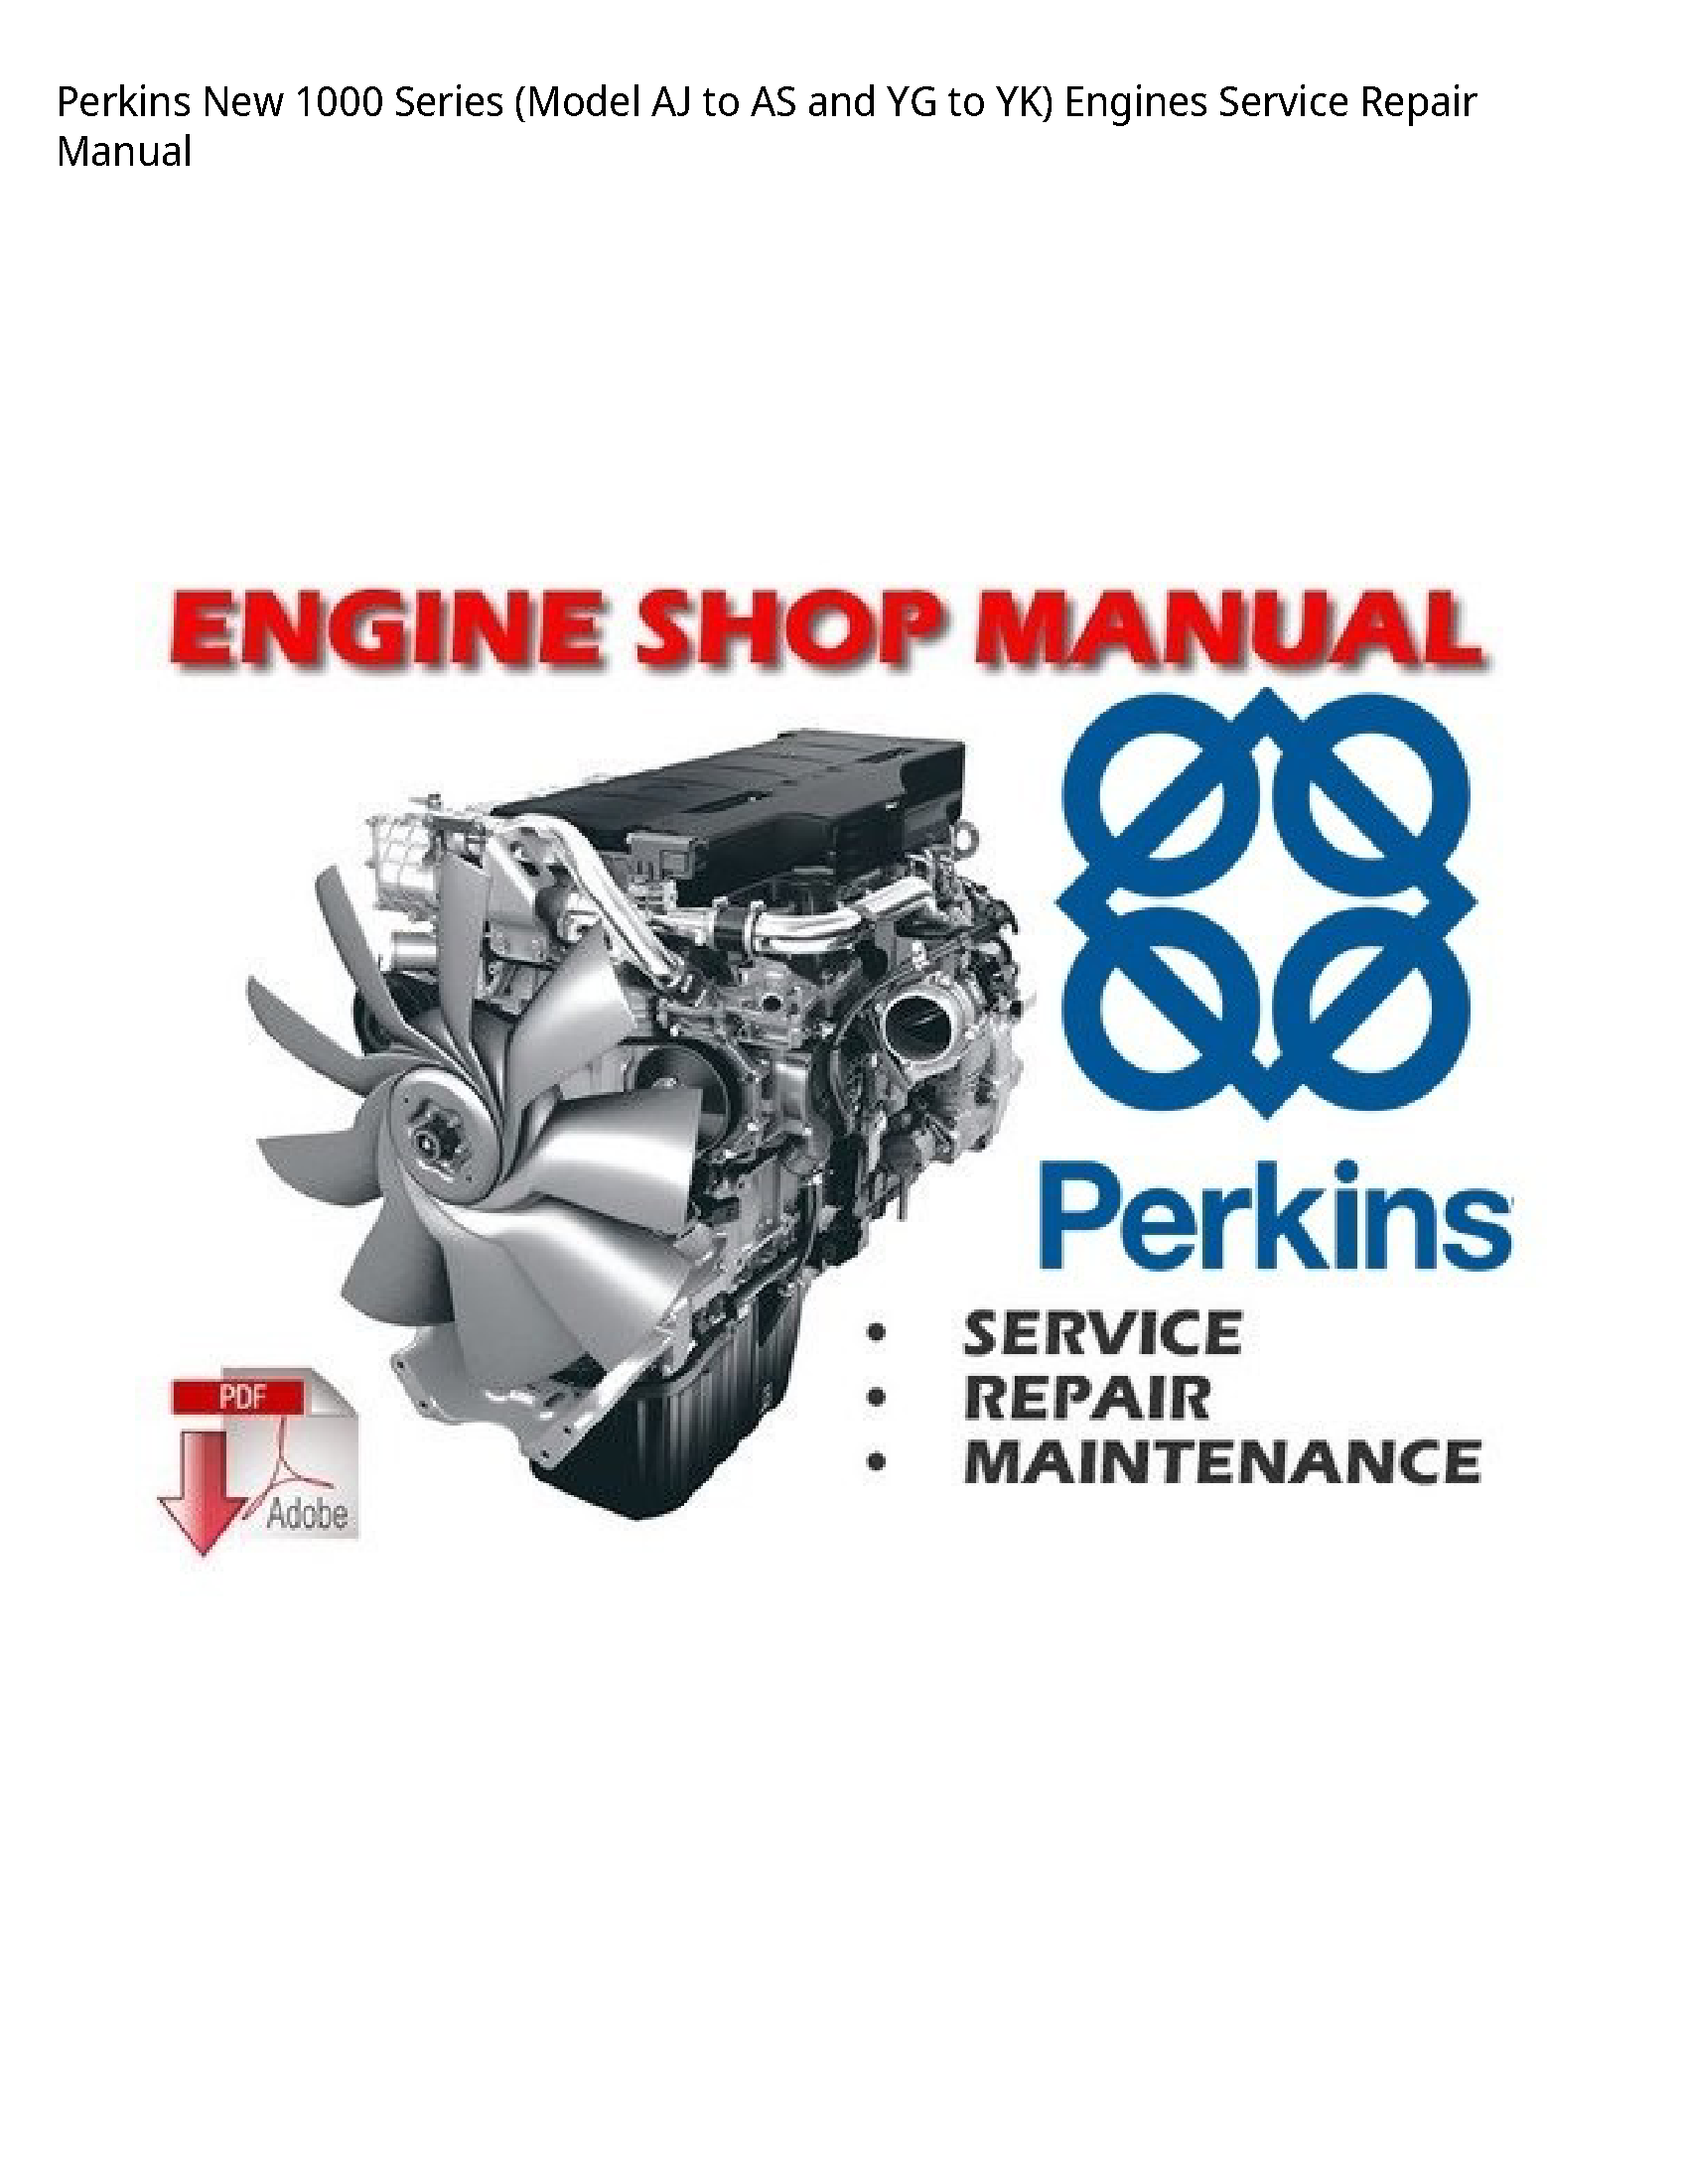 Perkins 1000 New Series (Model AJ to AS  YG to YK) Engines manual